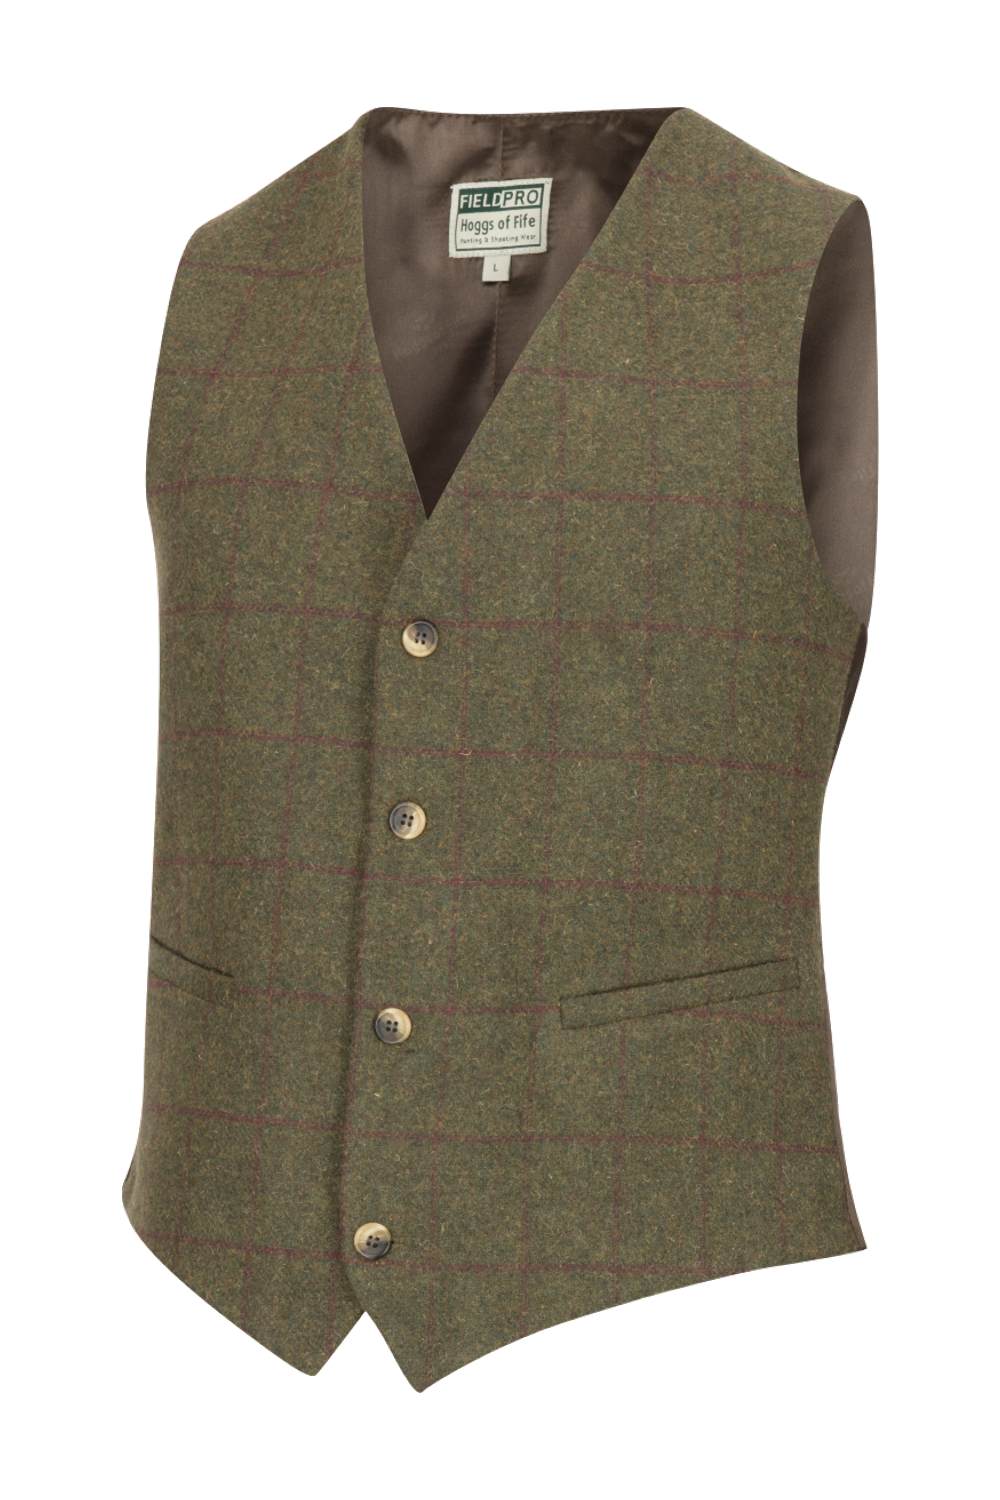 Hoggs of Fife Tummel Tweed Dress Waistcoat- Olive/Wine